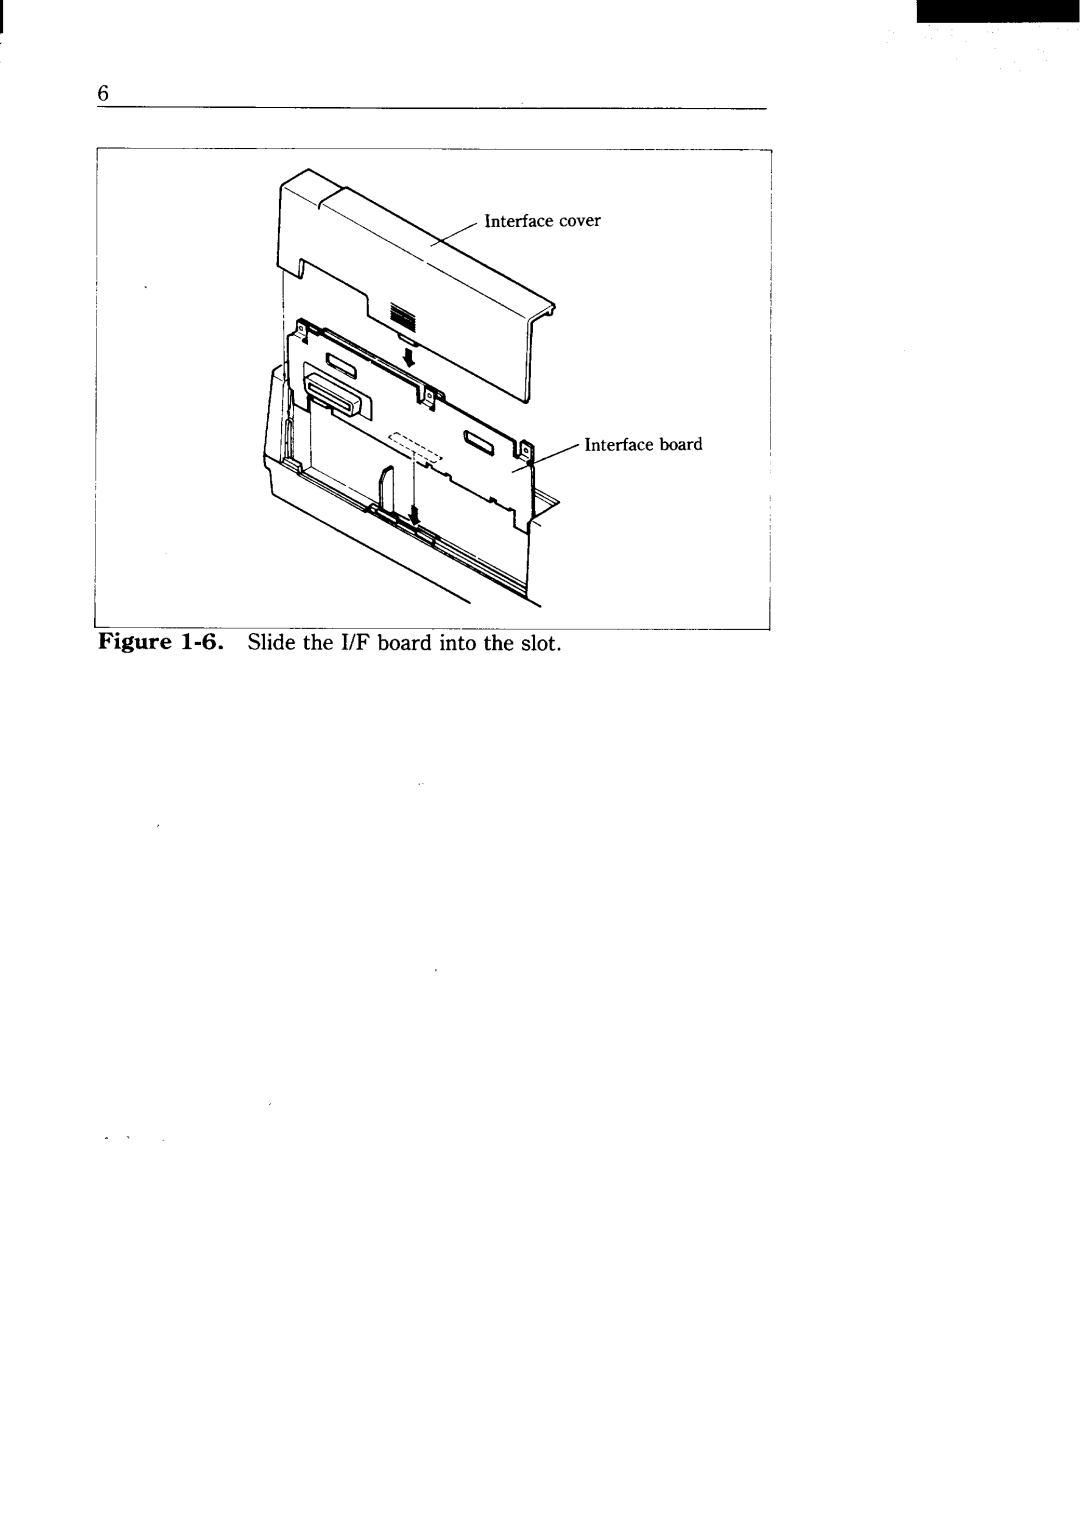 Star Micronics NX-15 user manual ~igure 1-6. Slidethe I/F board into the slot, I terface board ~ 